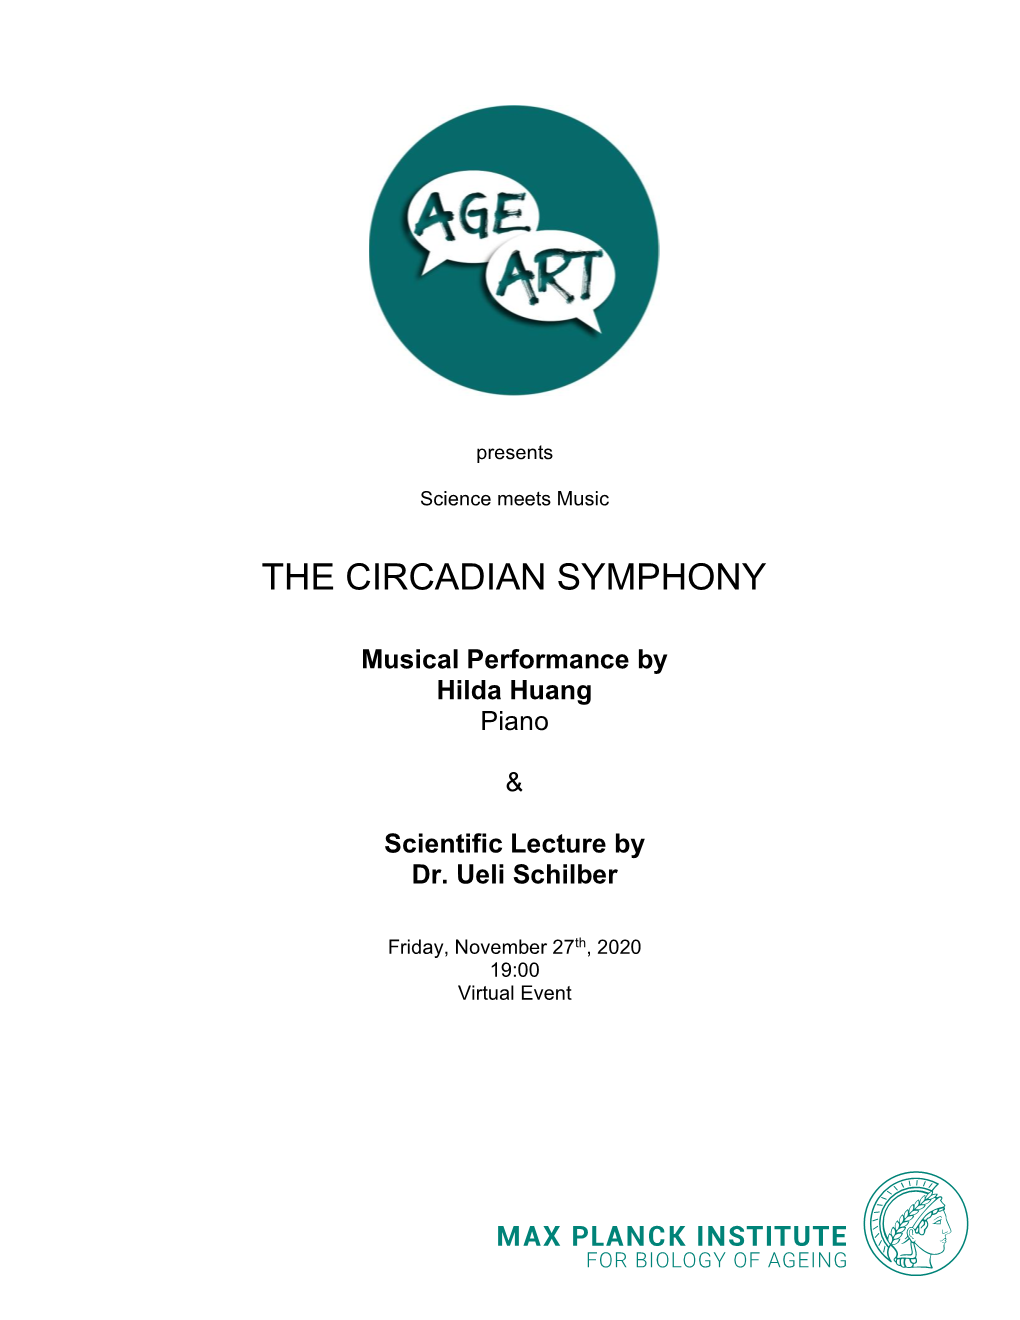 The Circadian Symphony